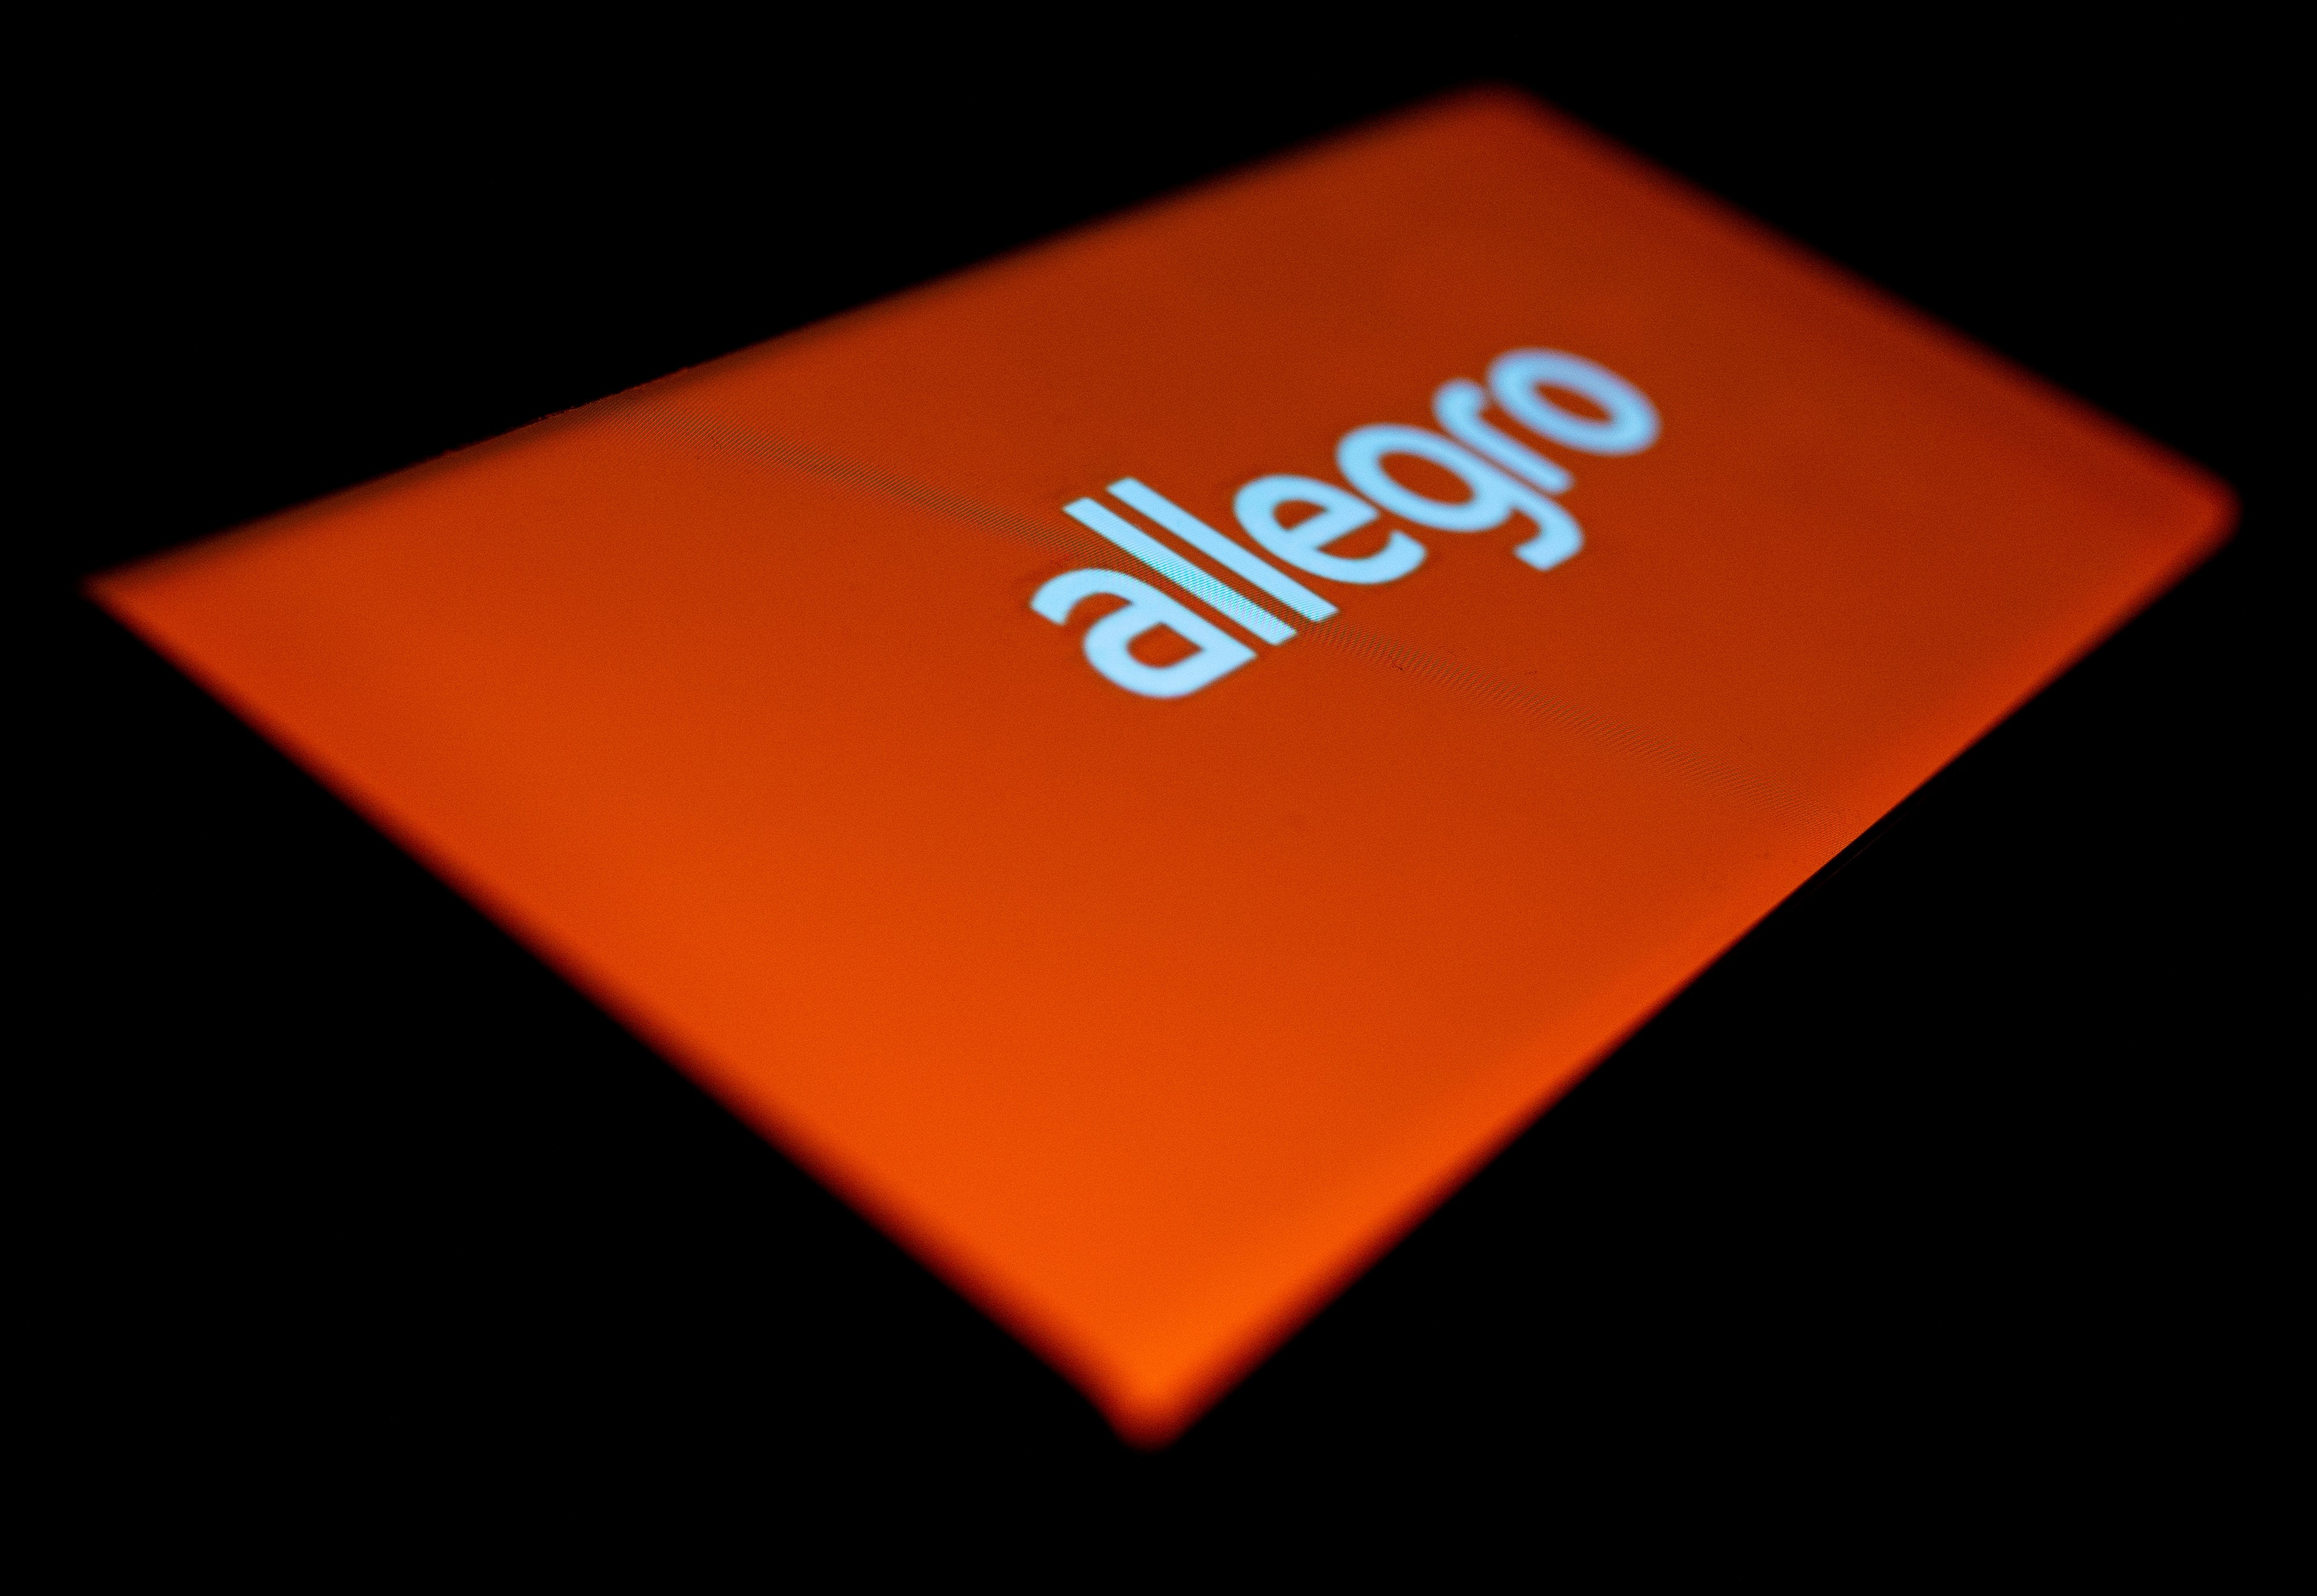 Allegro accelerates growth